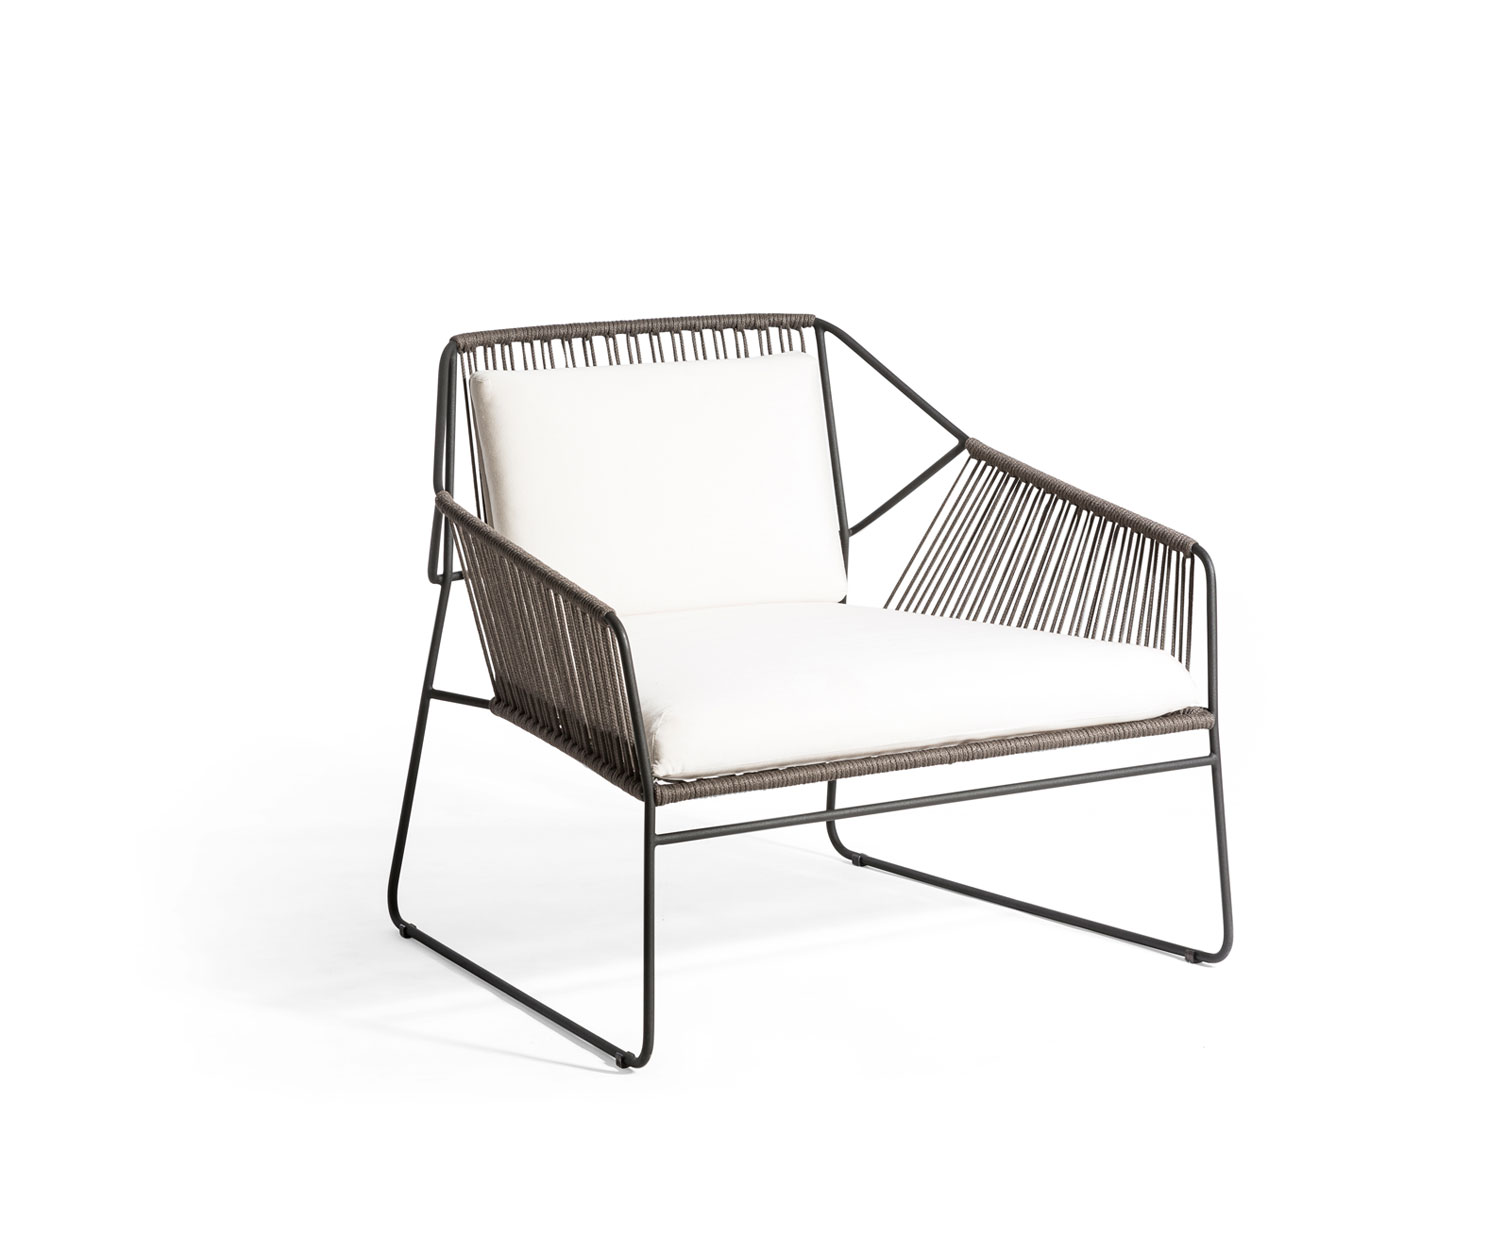 Oasiq Sandur Schnur design armchair with dark grey frame and white seat cushion